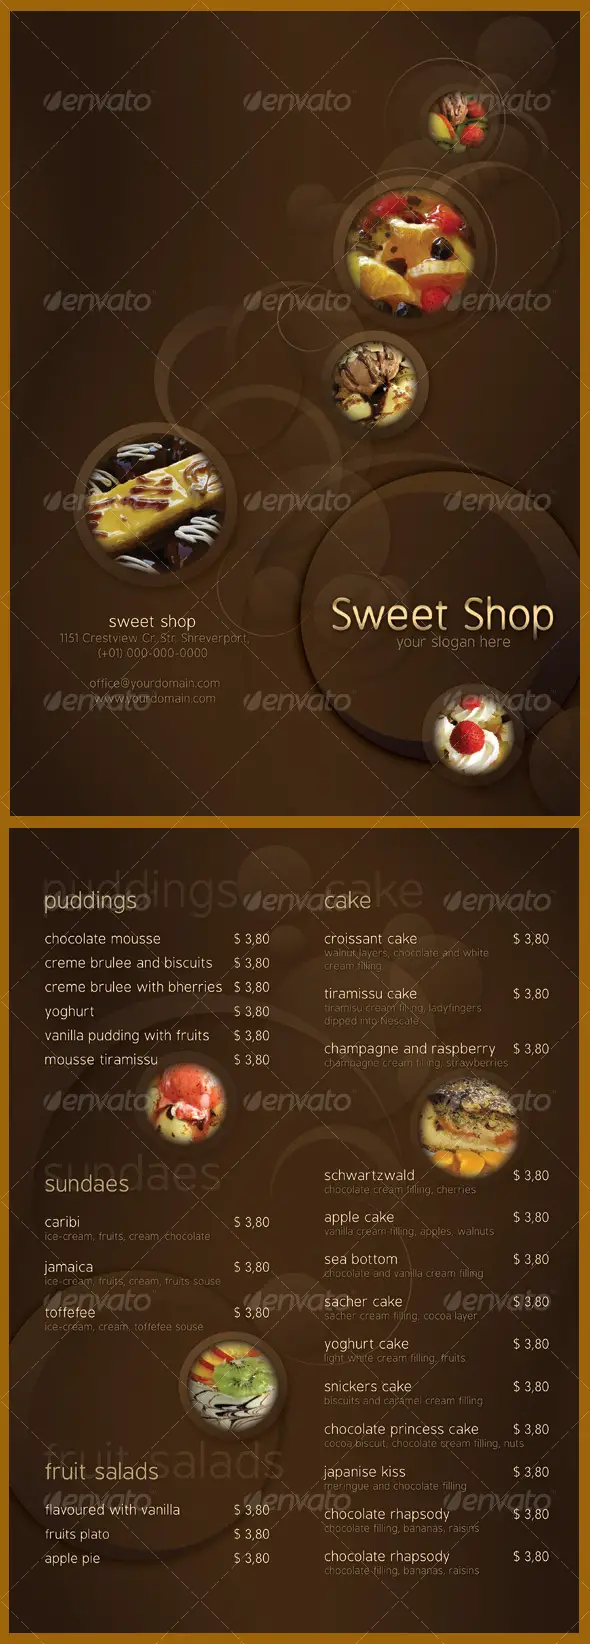 Sweet Shop Menu